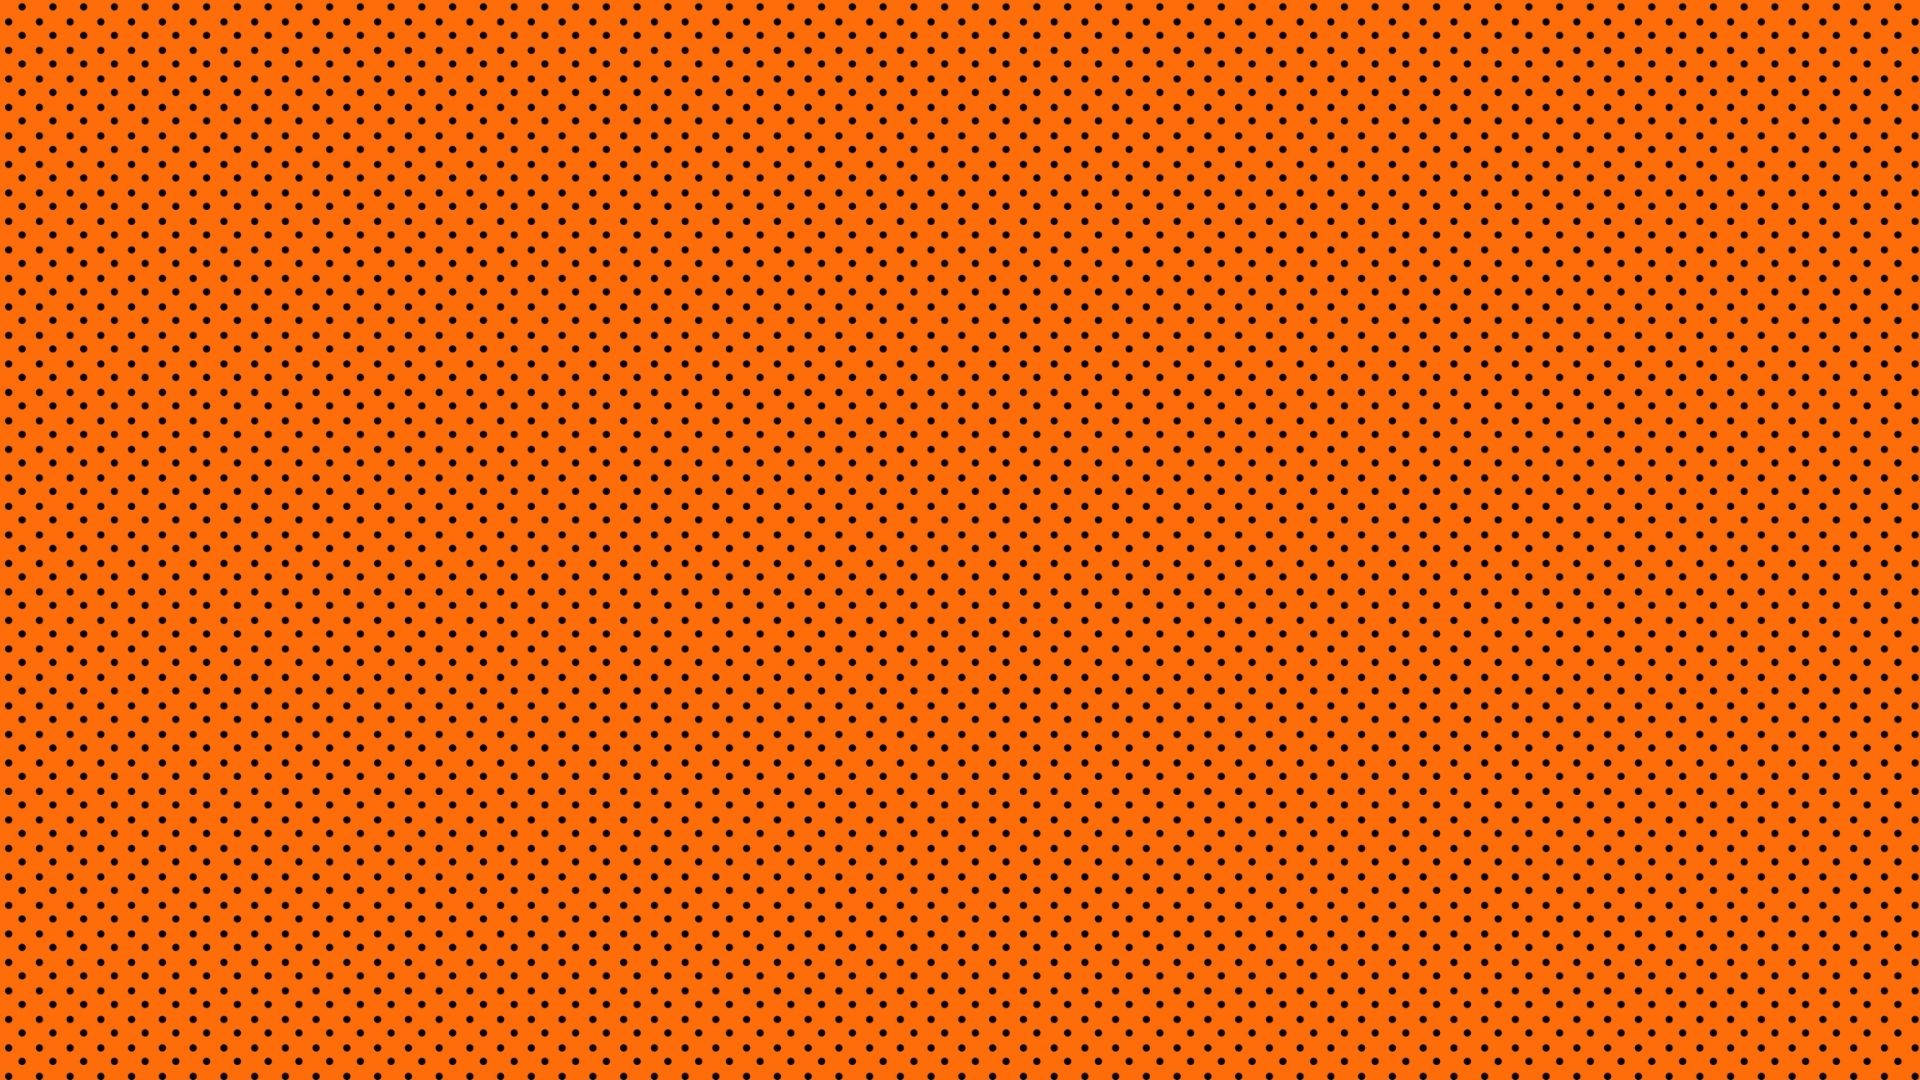 Black Dots On An Orange Background Wallpaper